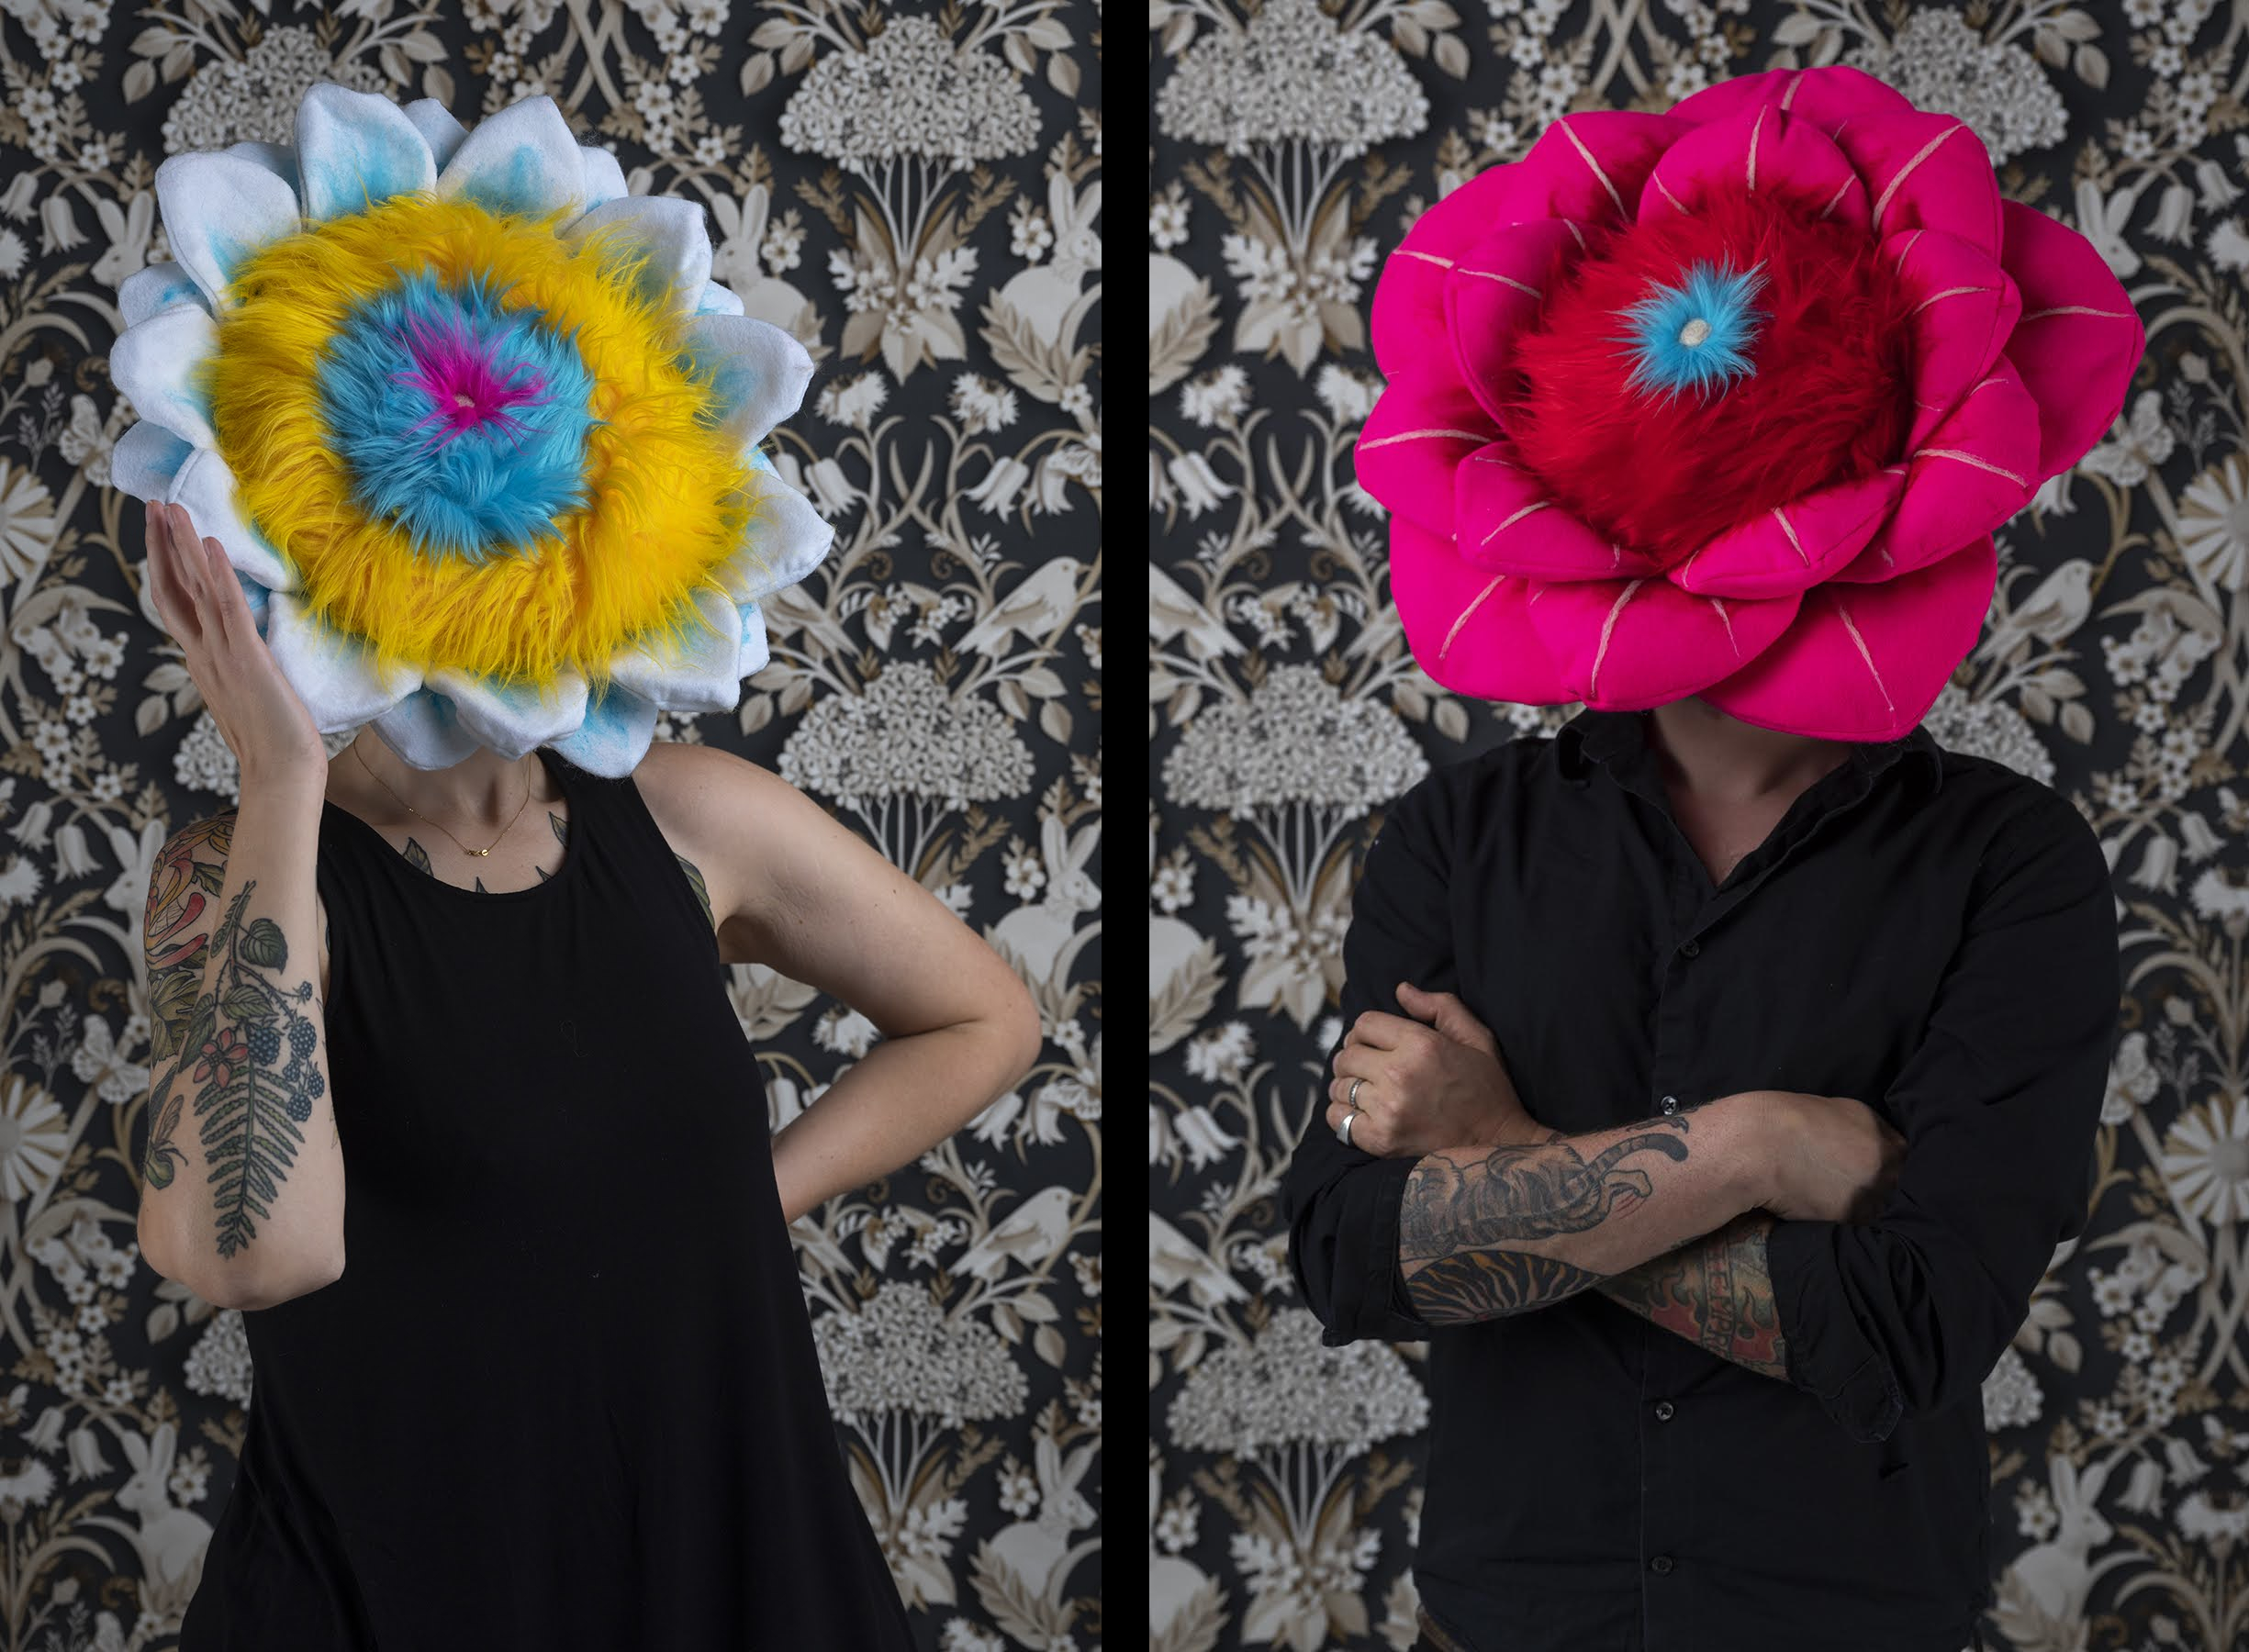 Ryan Lytle and Kristin Skees wear fiber flowers on their heads